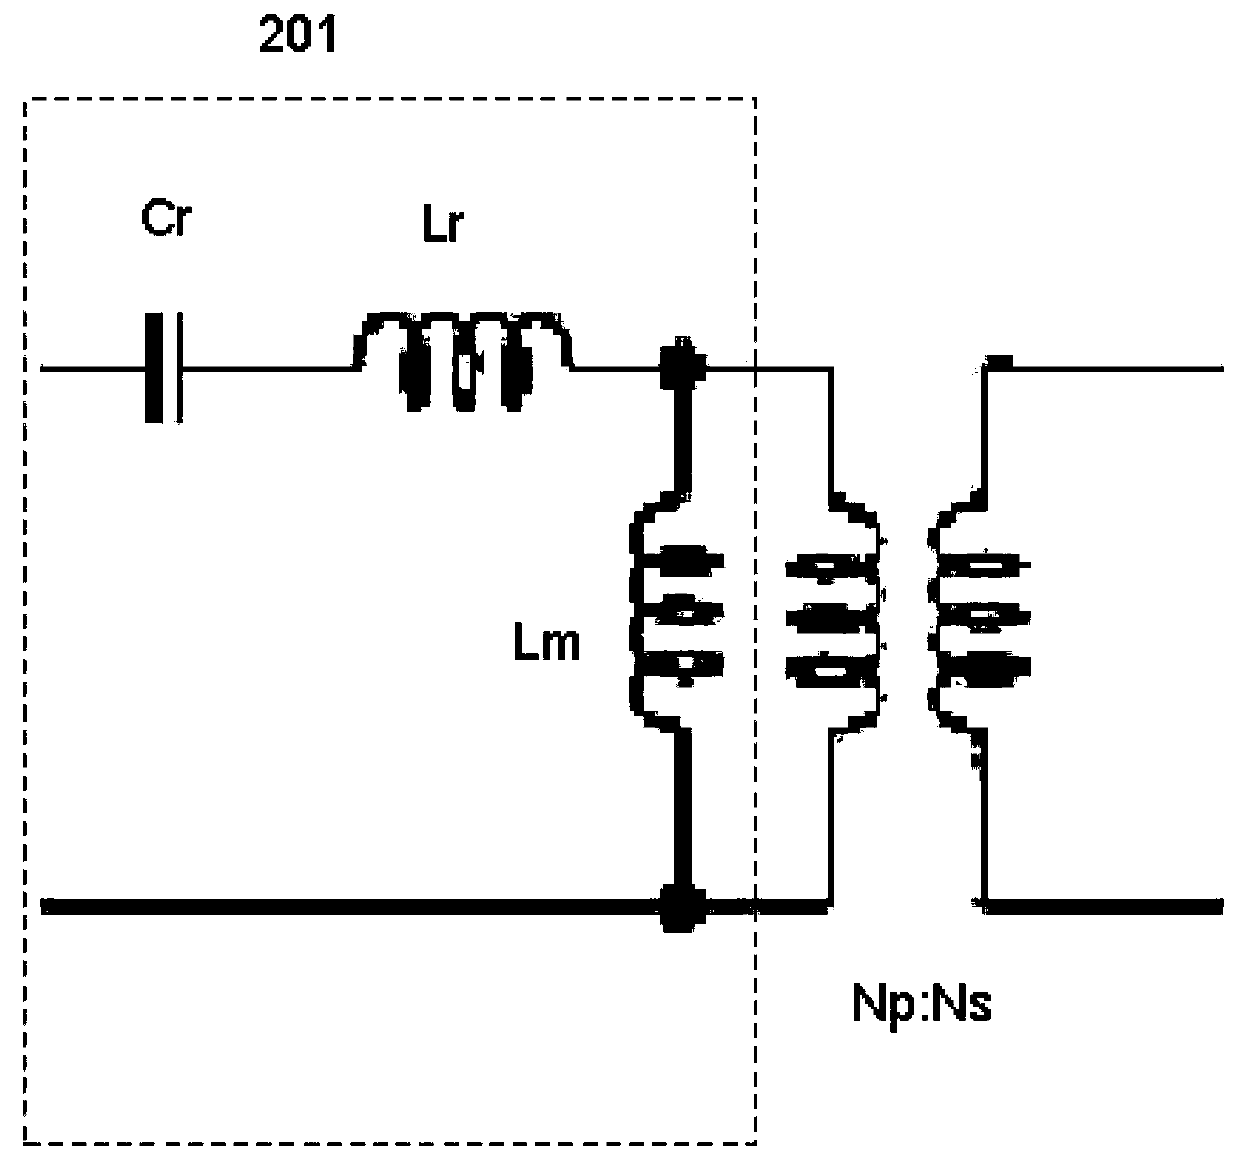 Transformer unit for a resonant converter